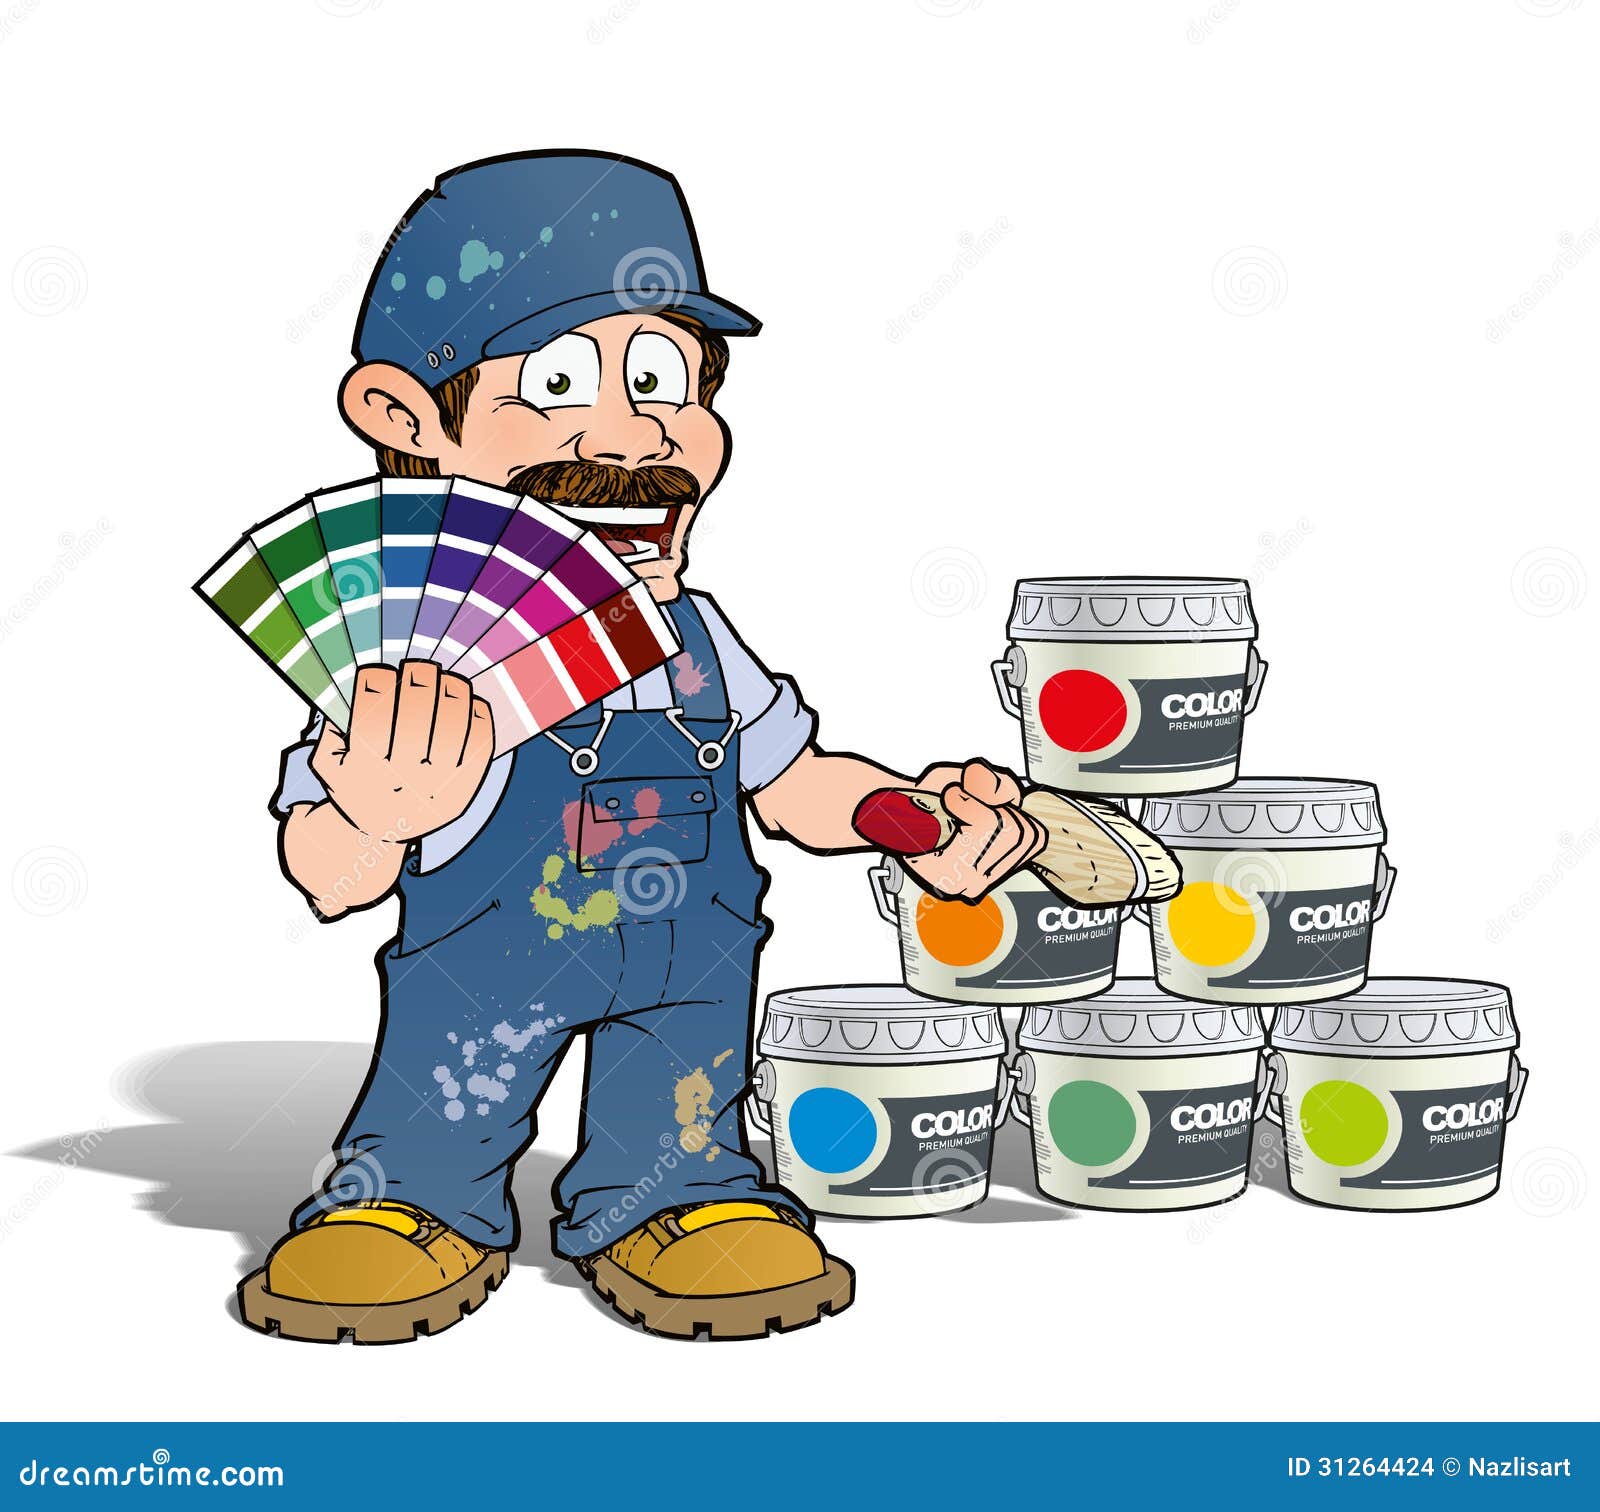 handyman - colour picking painter - blue